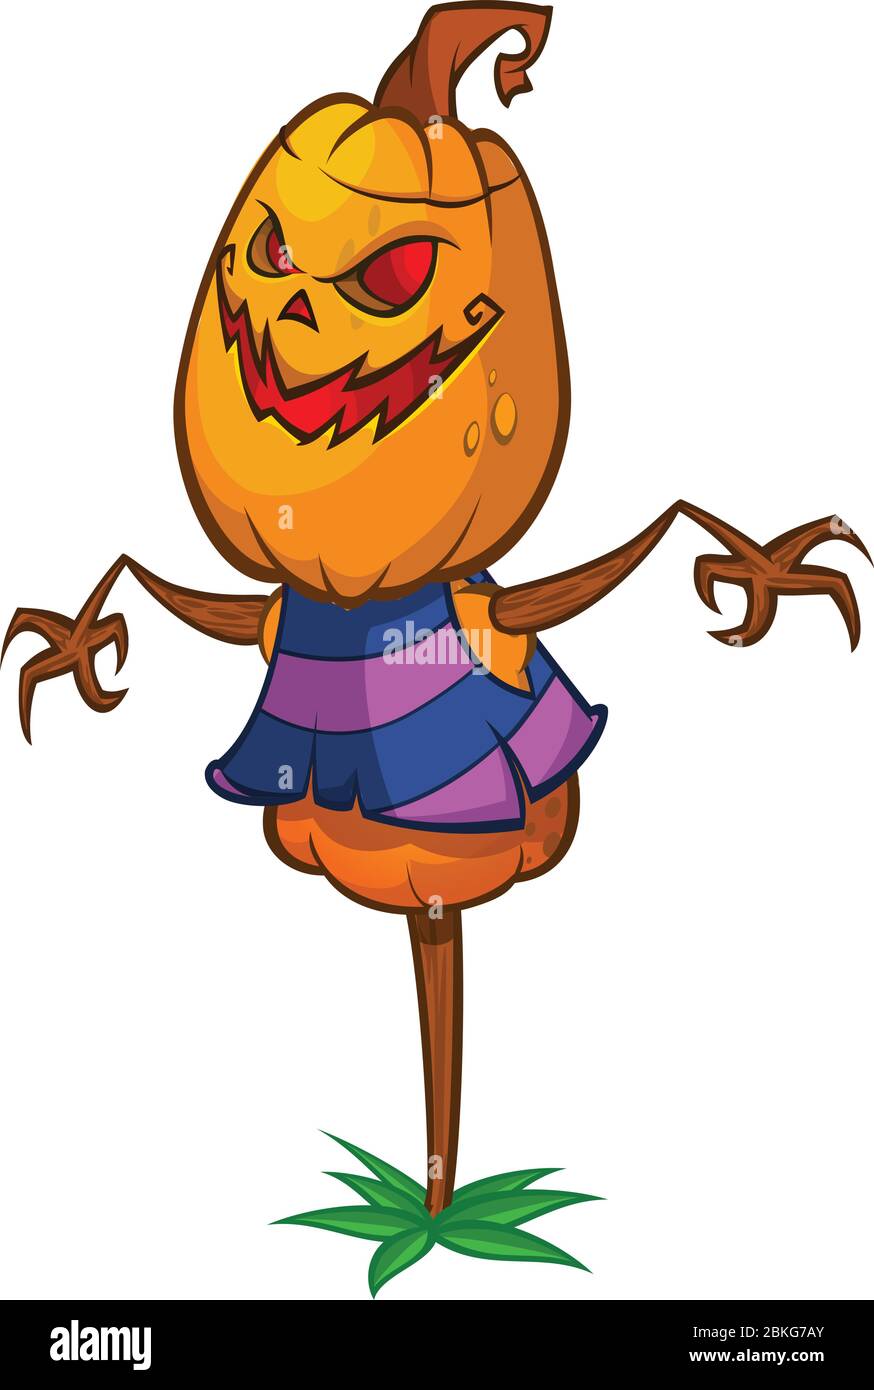 pumpkin head character from animeTikTok Search